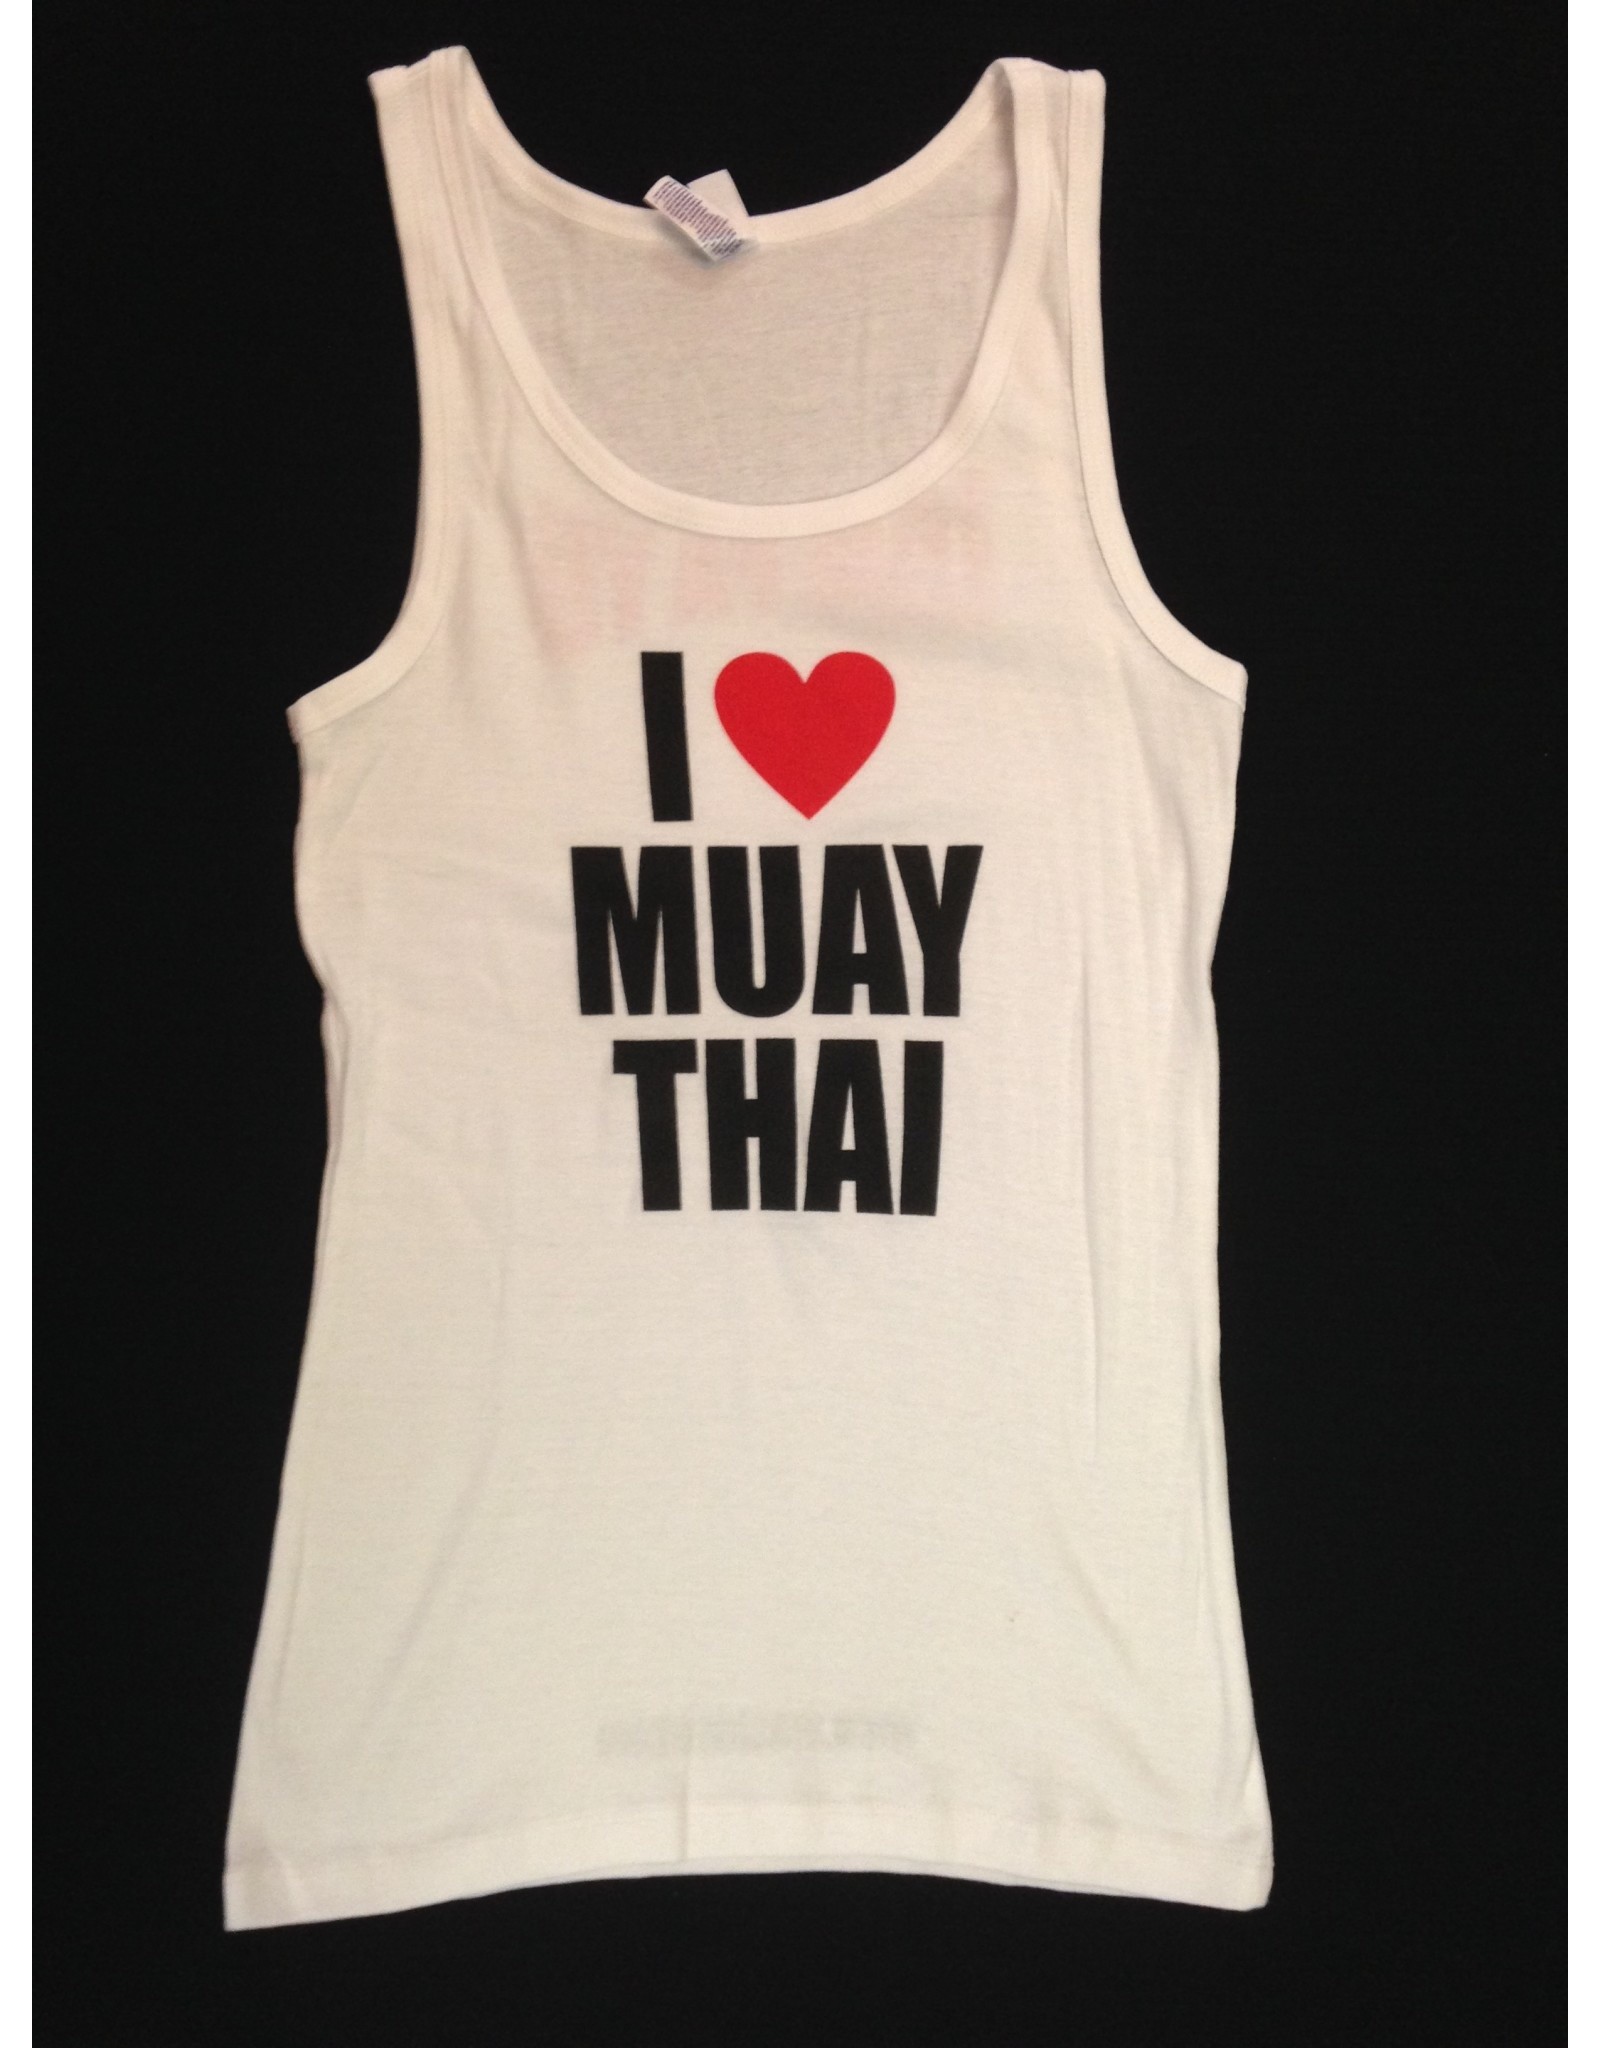 Lom Pa Yu Shirts Women's I Heart Muay Thai Tank